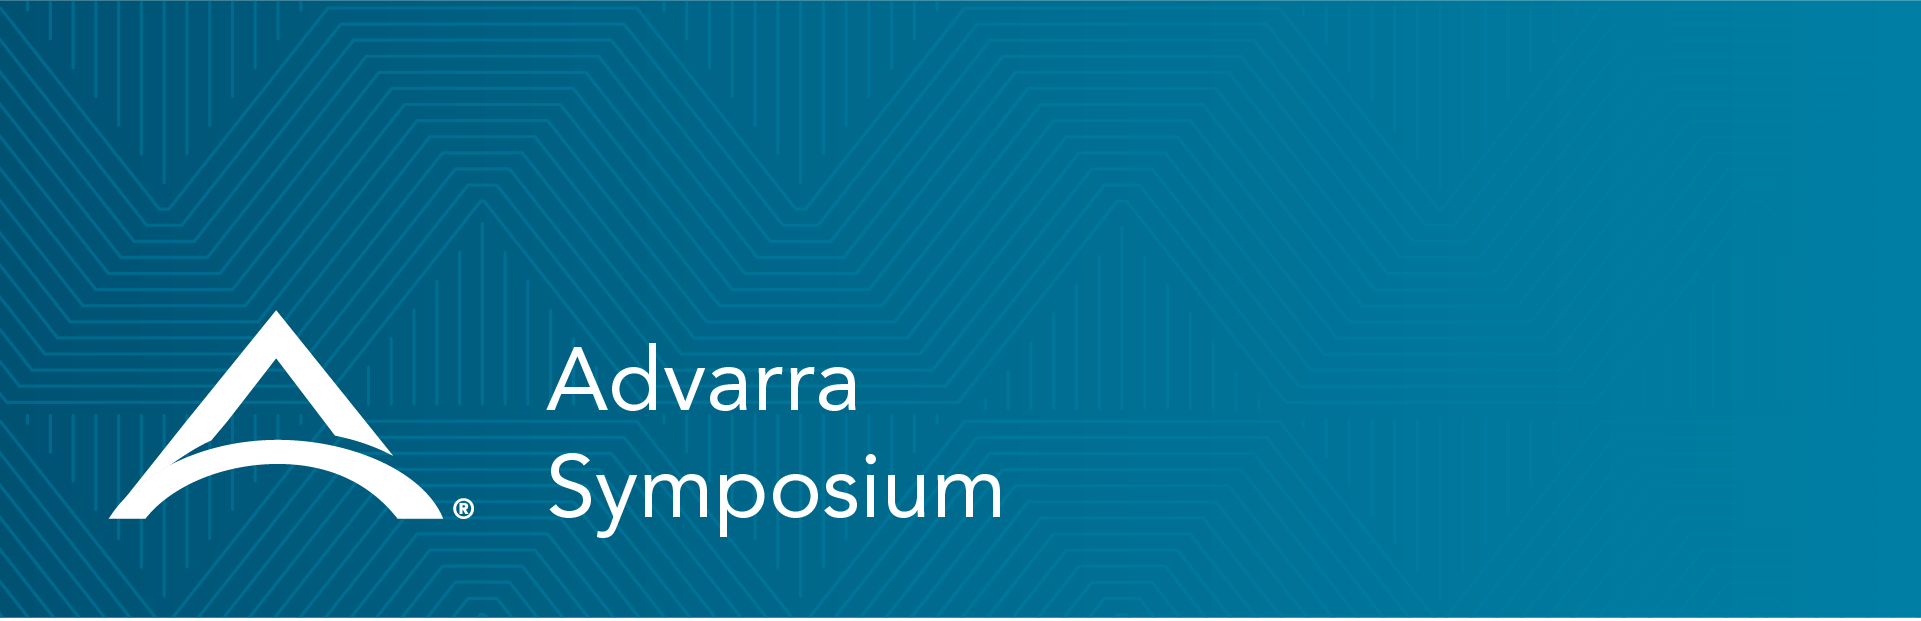 Advarra Symposium Reg Form Image.png